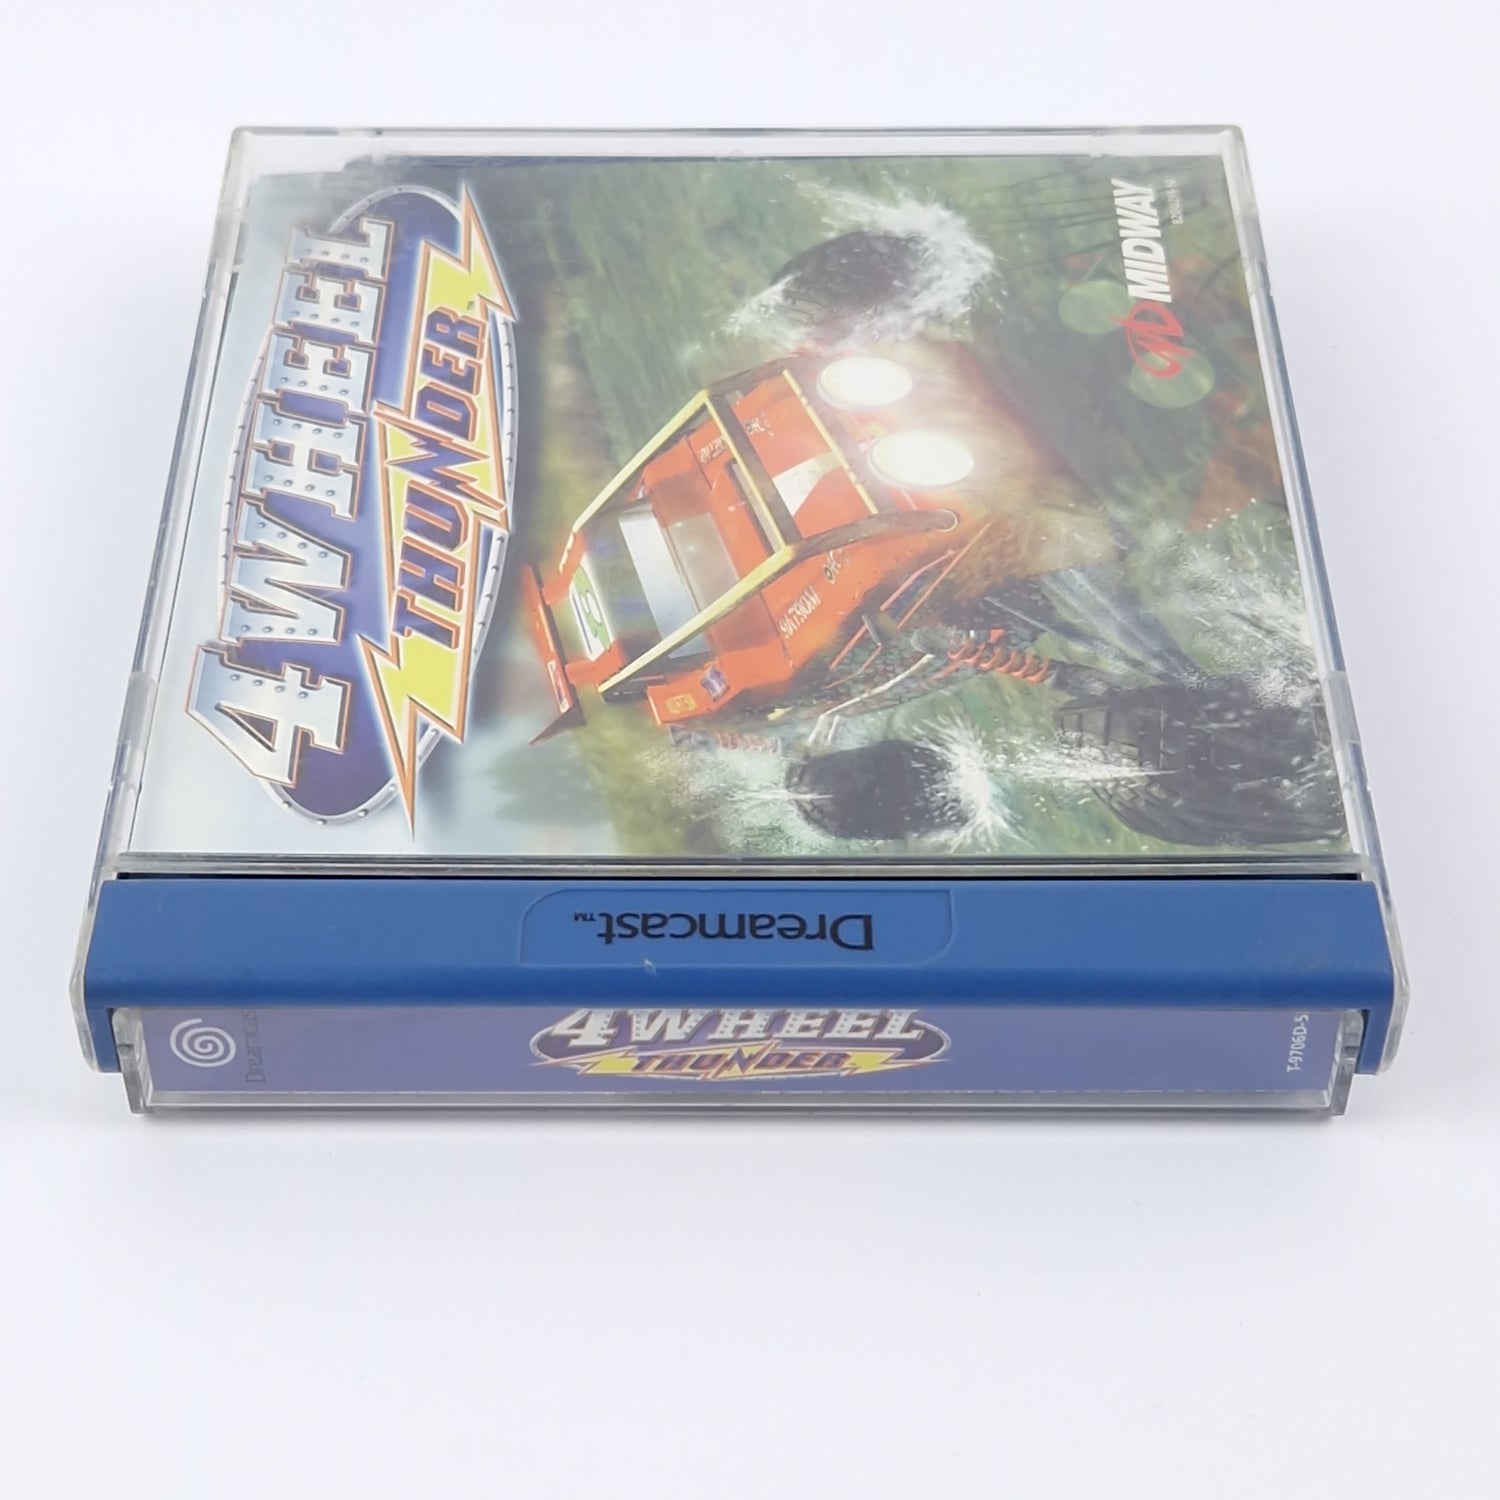 Sega Dreamcast Game: 4 Wheel Thunder - OVP Instructions CD | DC PAL Game